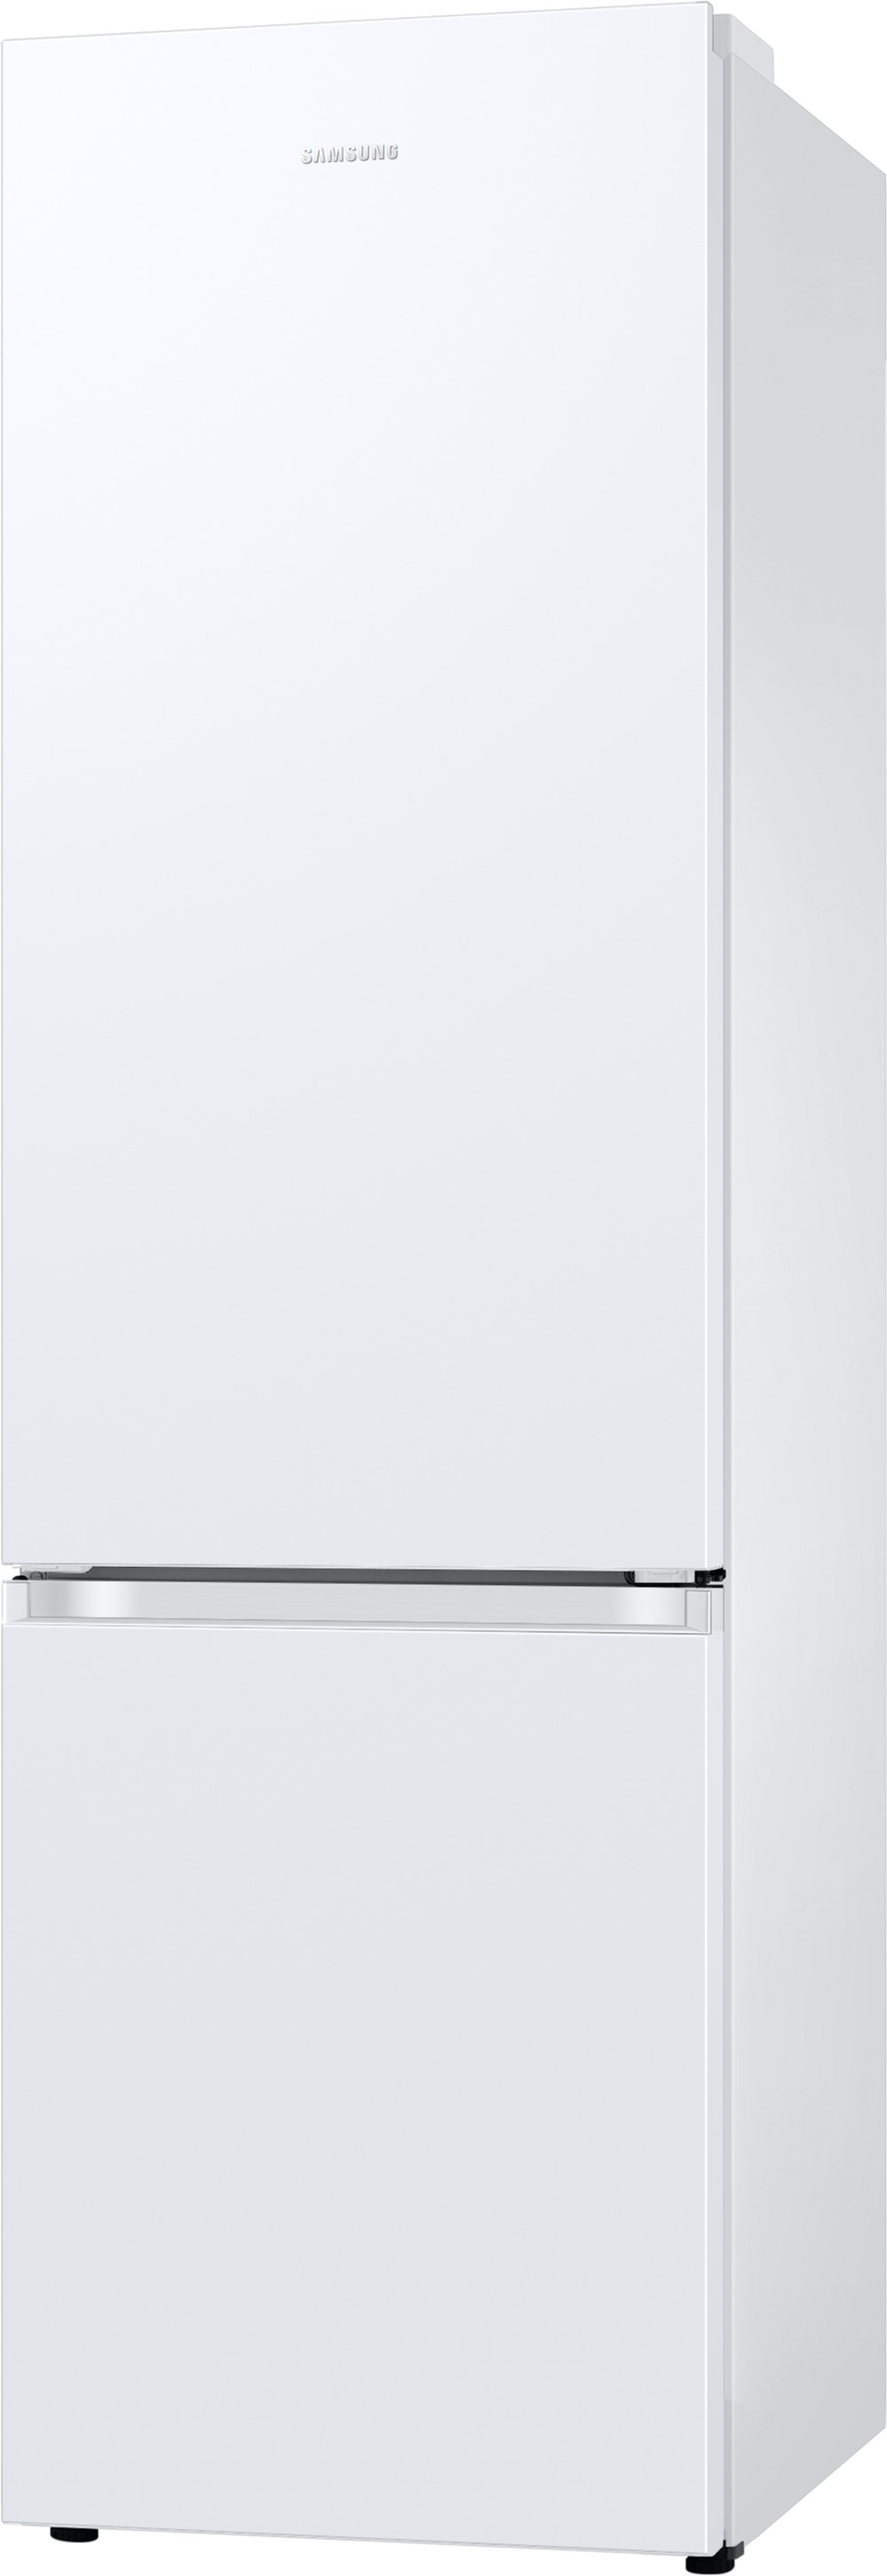 Холодильник Samsung RB38C600EWW/UA цена 27099 грн - фотография 2